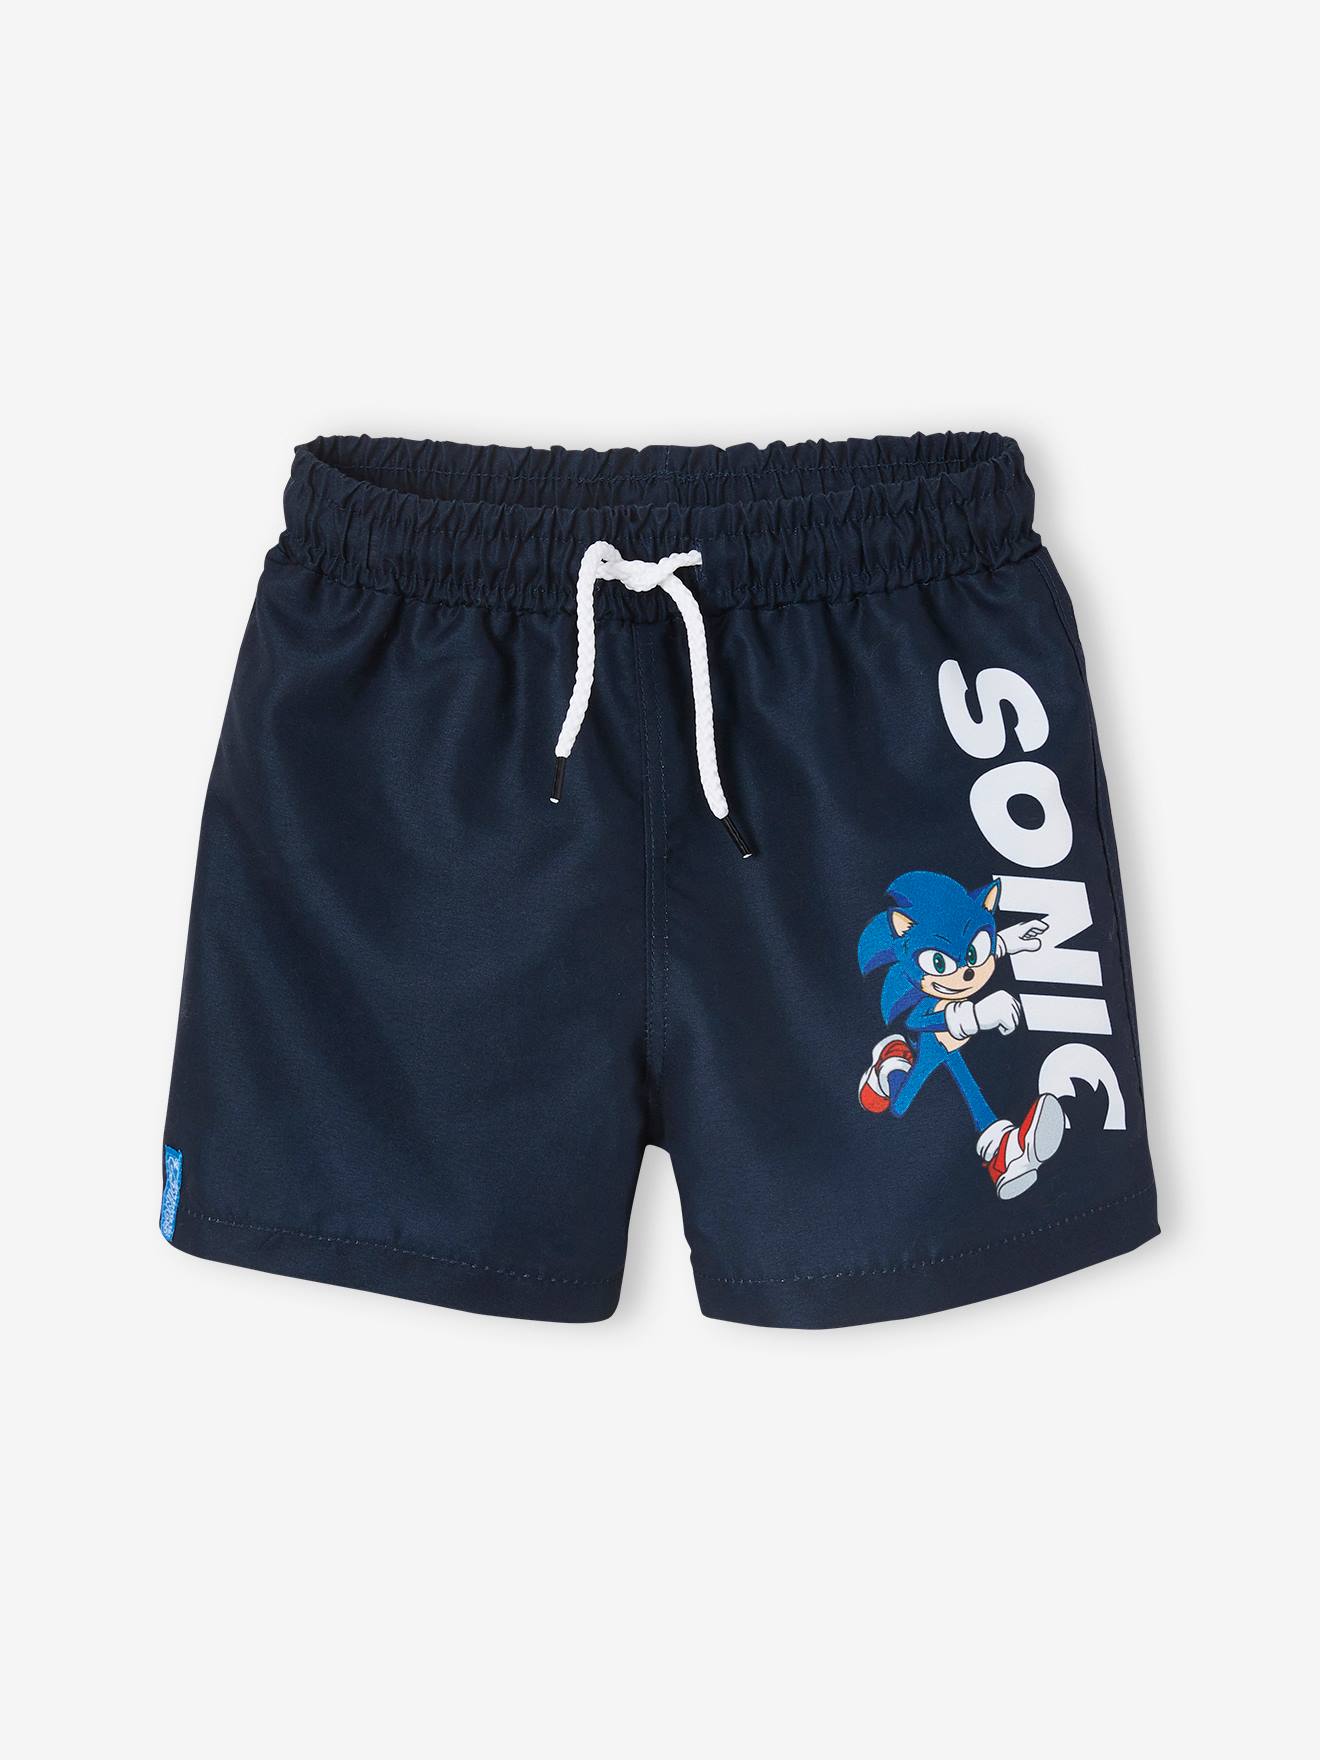 Sonic(r) Swim Shorts for Boys navy blue